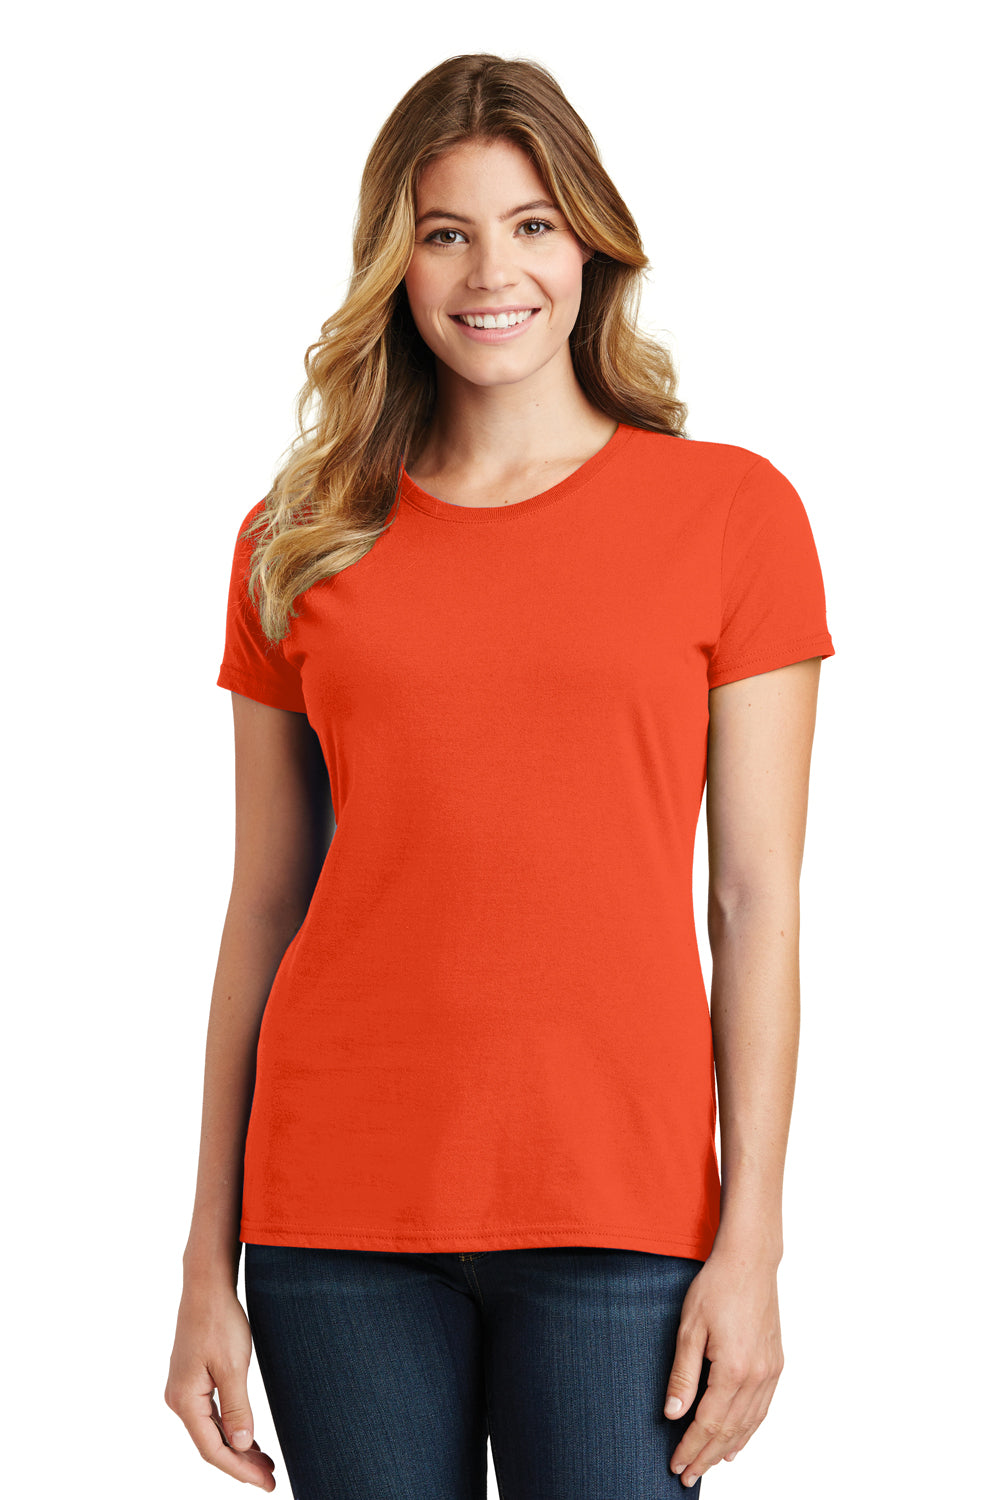 Port & Company LPC450 Womens Fan Favorite Short Sleeve Crewneck T-Shirt Orange Front